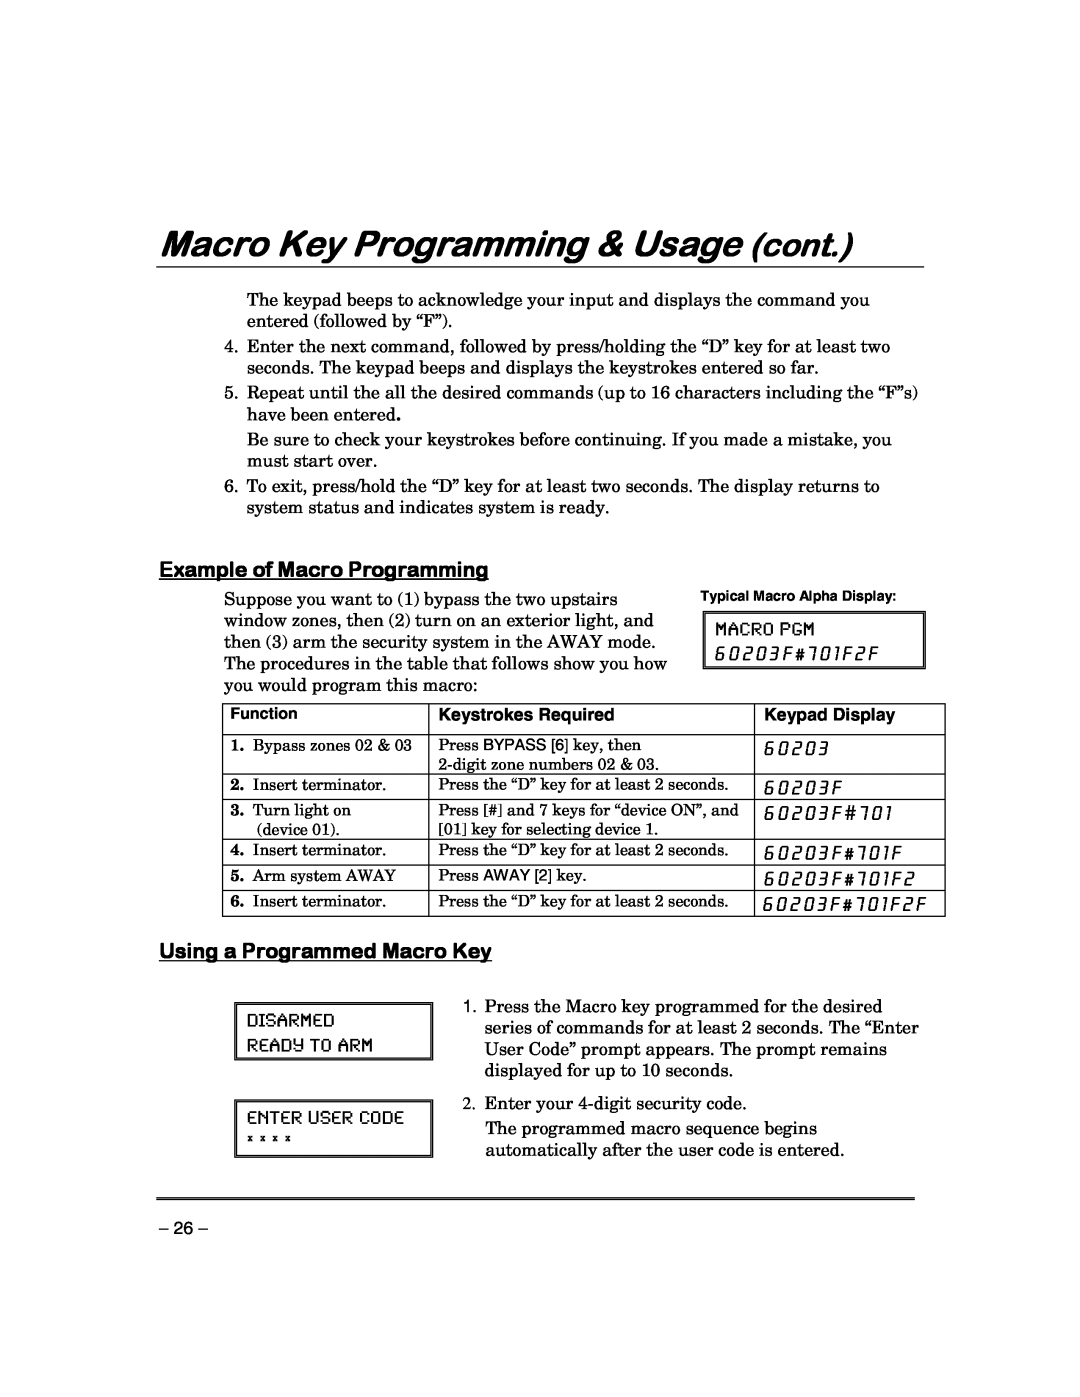 First Alert FA148CPSIA manual Macro Key Programming & Usage cont, Example of Macro Programming, 6 0 2 0 3 F # 7 0 1 F 2 F 